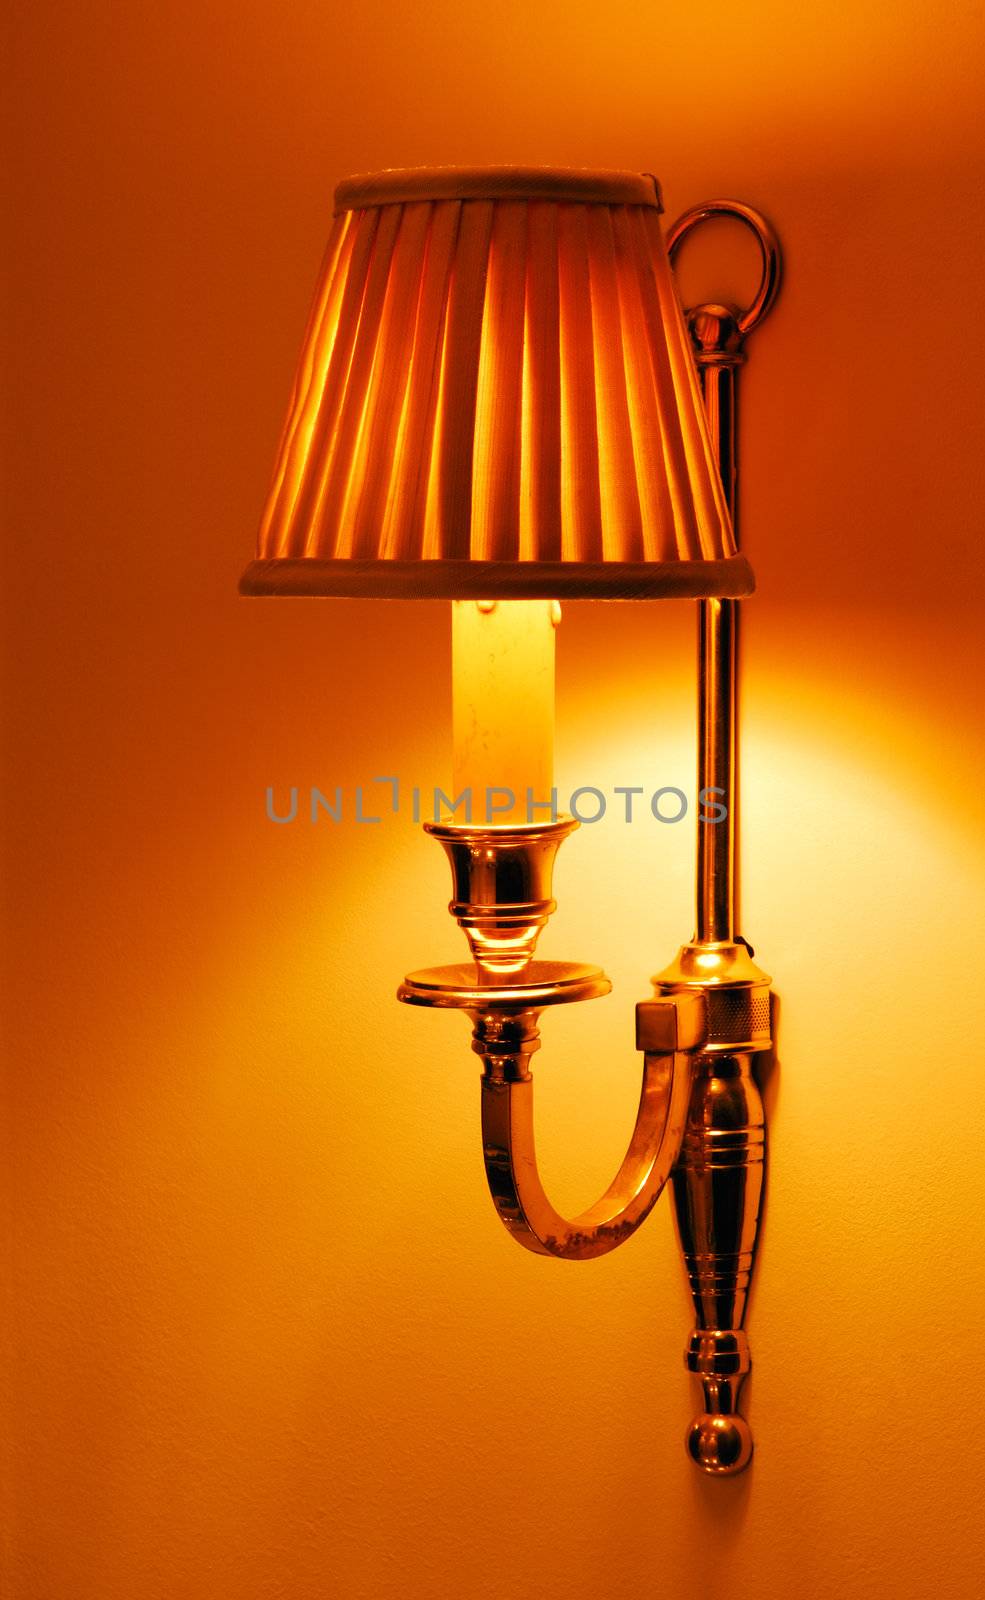 Image shows a lighted sconce delivering warm indoor lighting	
